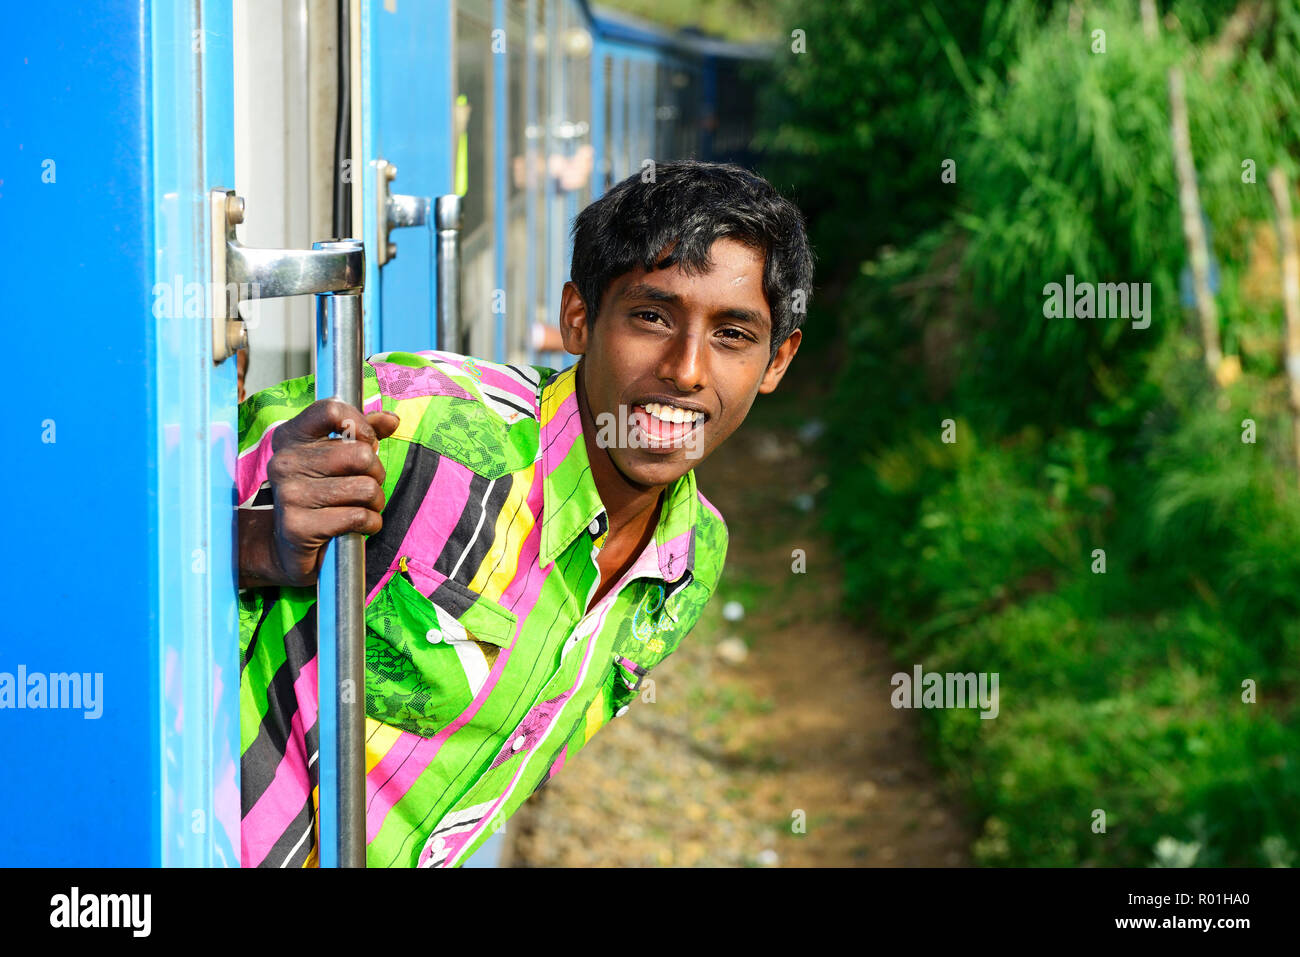 Young man hangs himself from moving train, Sri Lanka Stock Photo